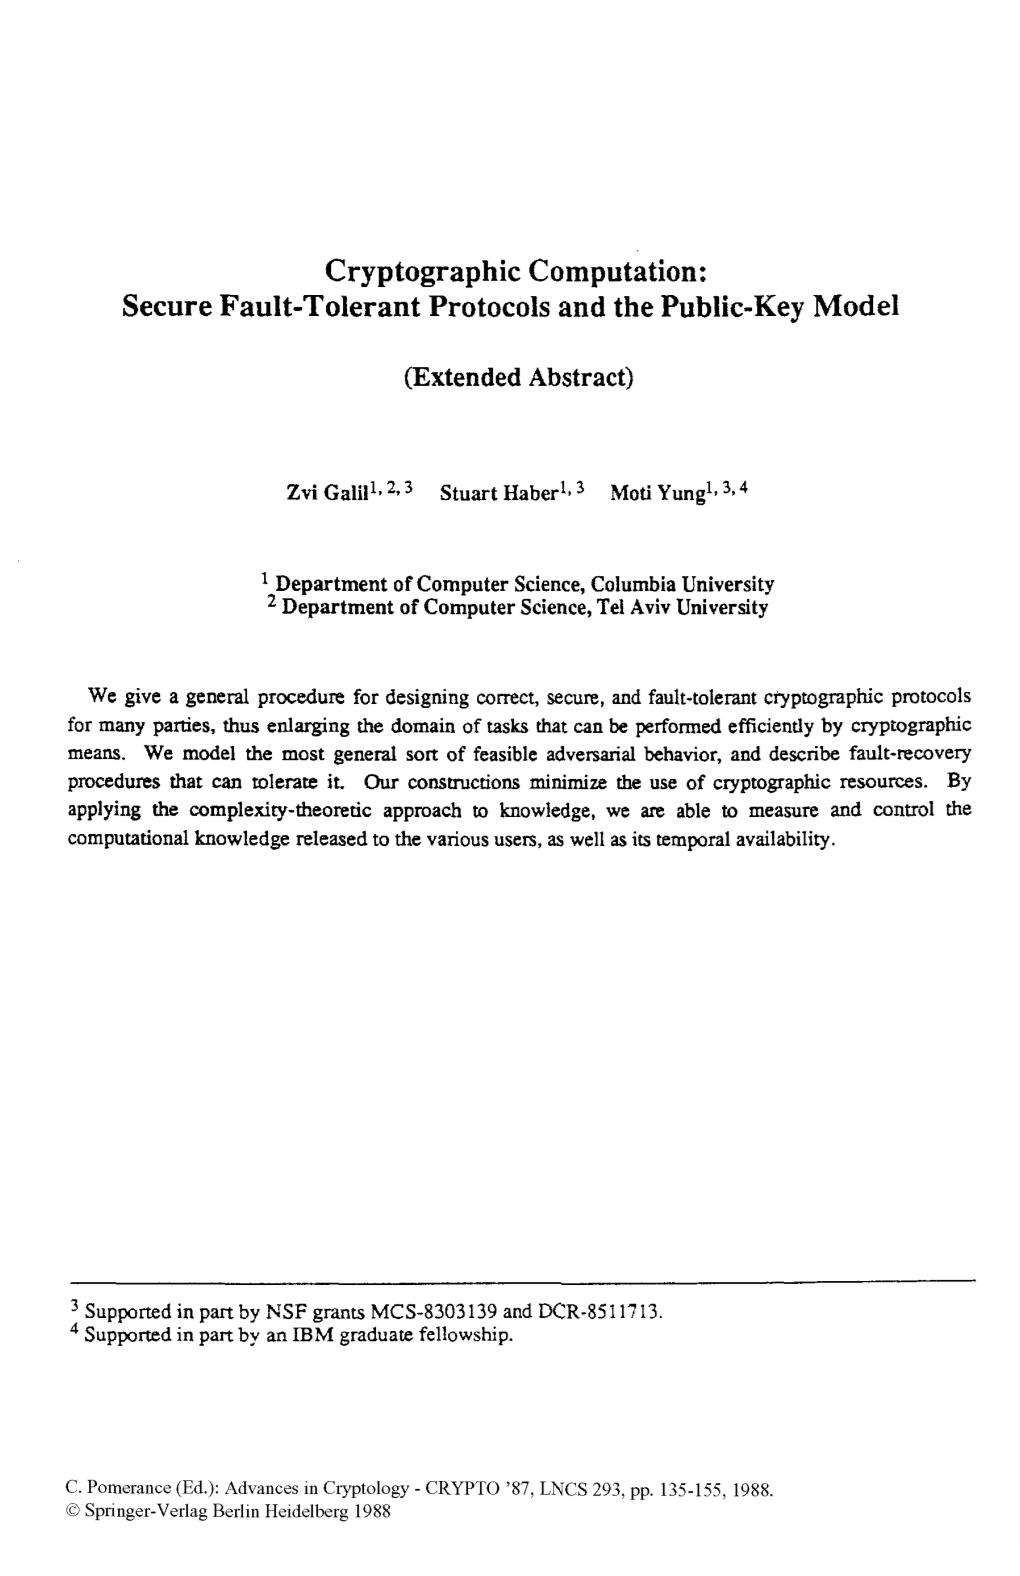 Secure Fault-Tolerant Protocols and the Public-Key Model